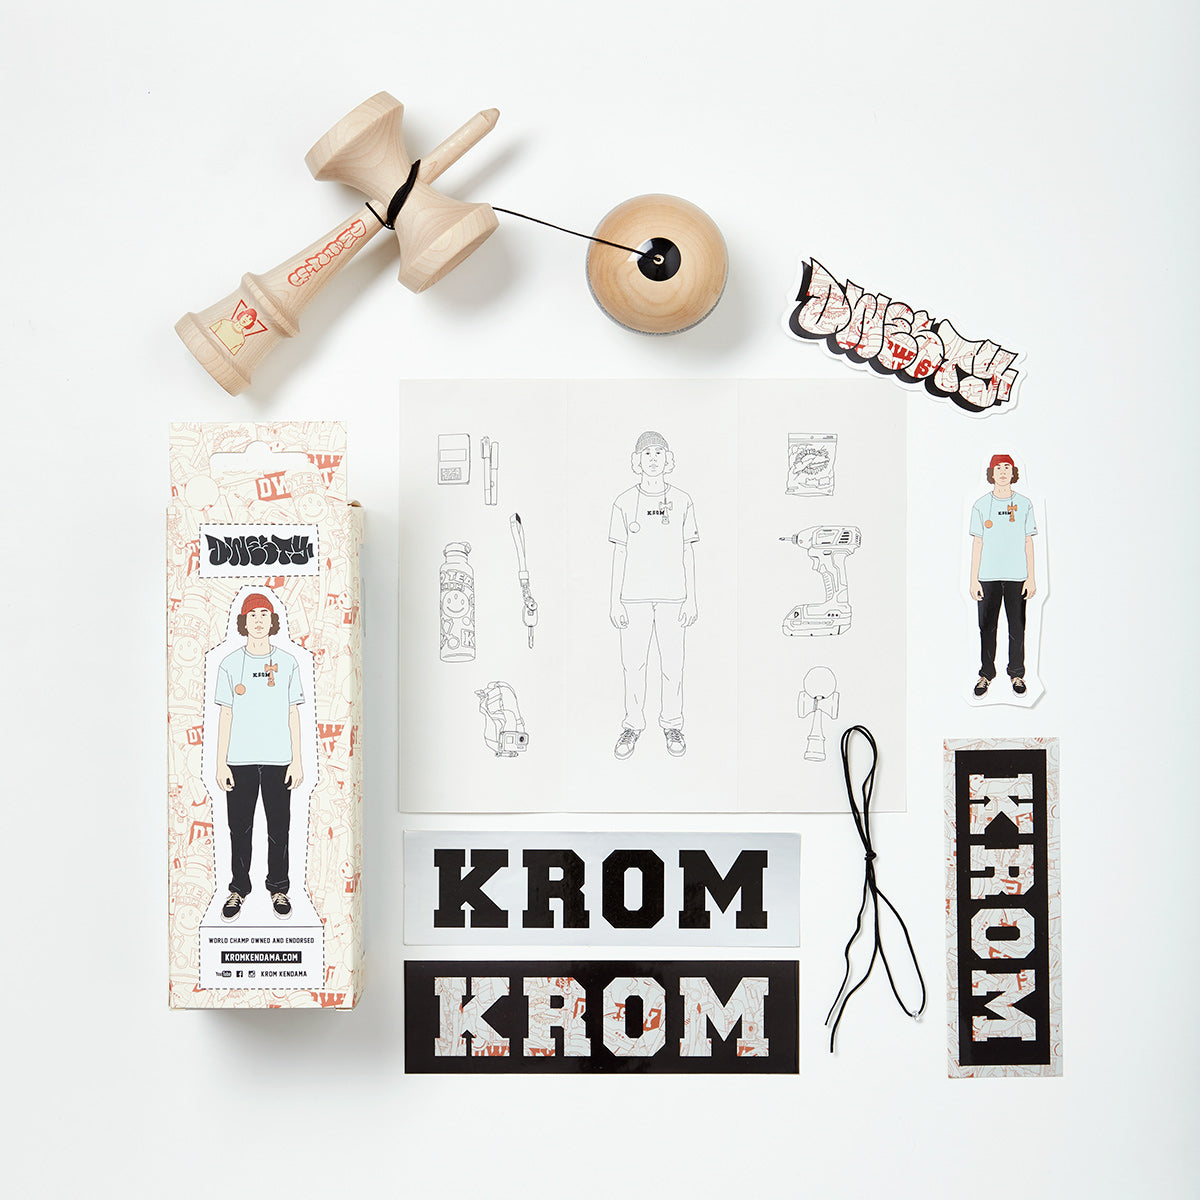 KROM – Dwesty DJ Pro mod kendama guts